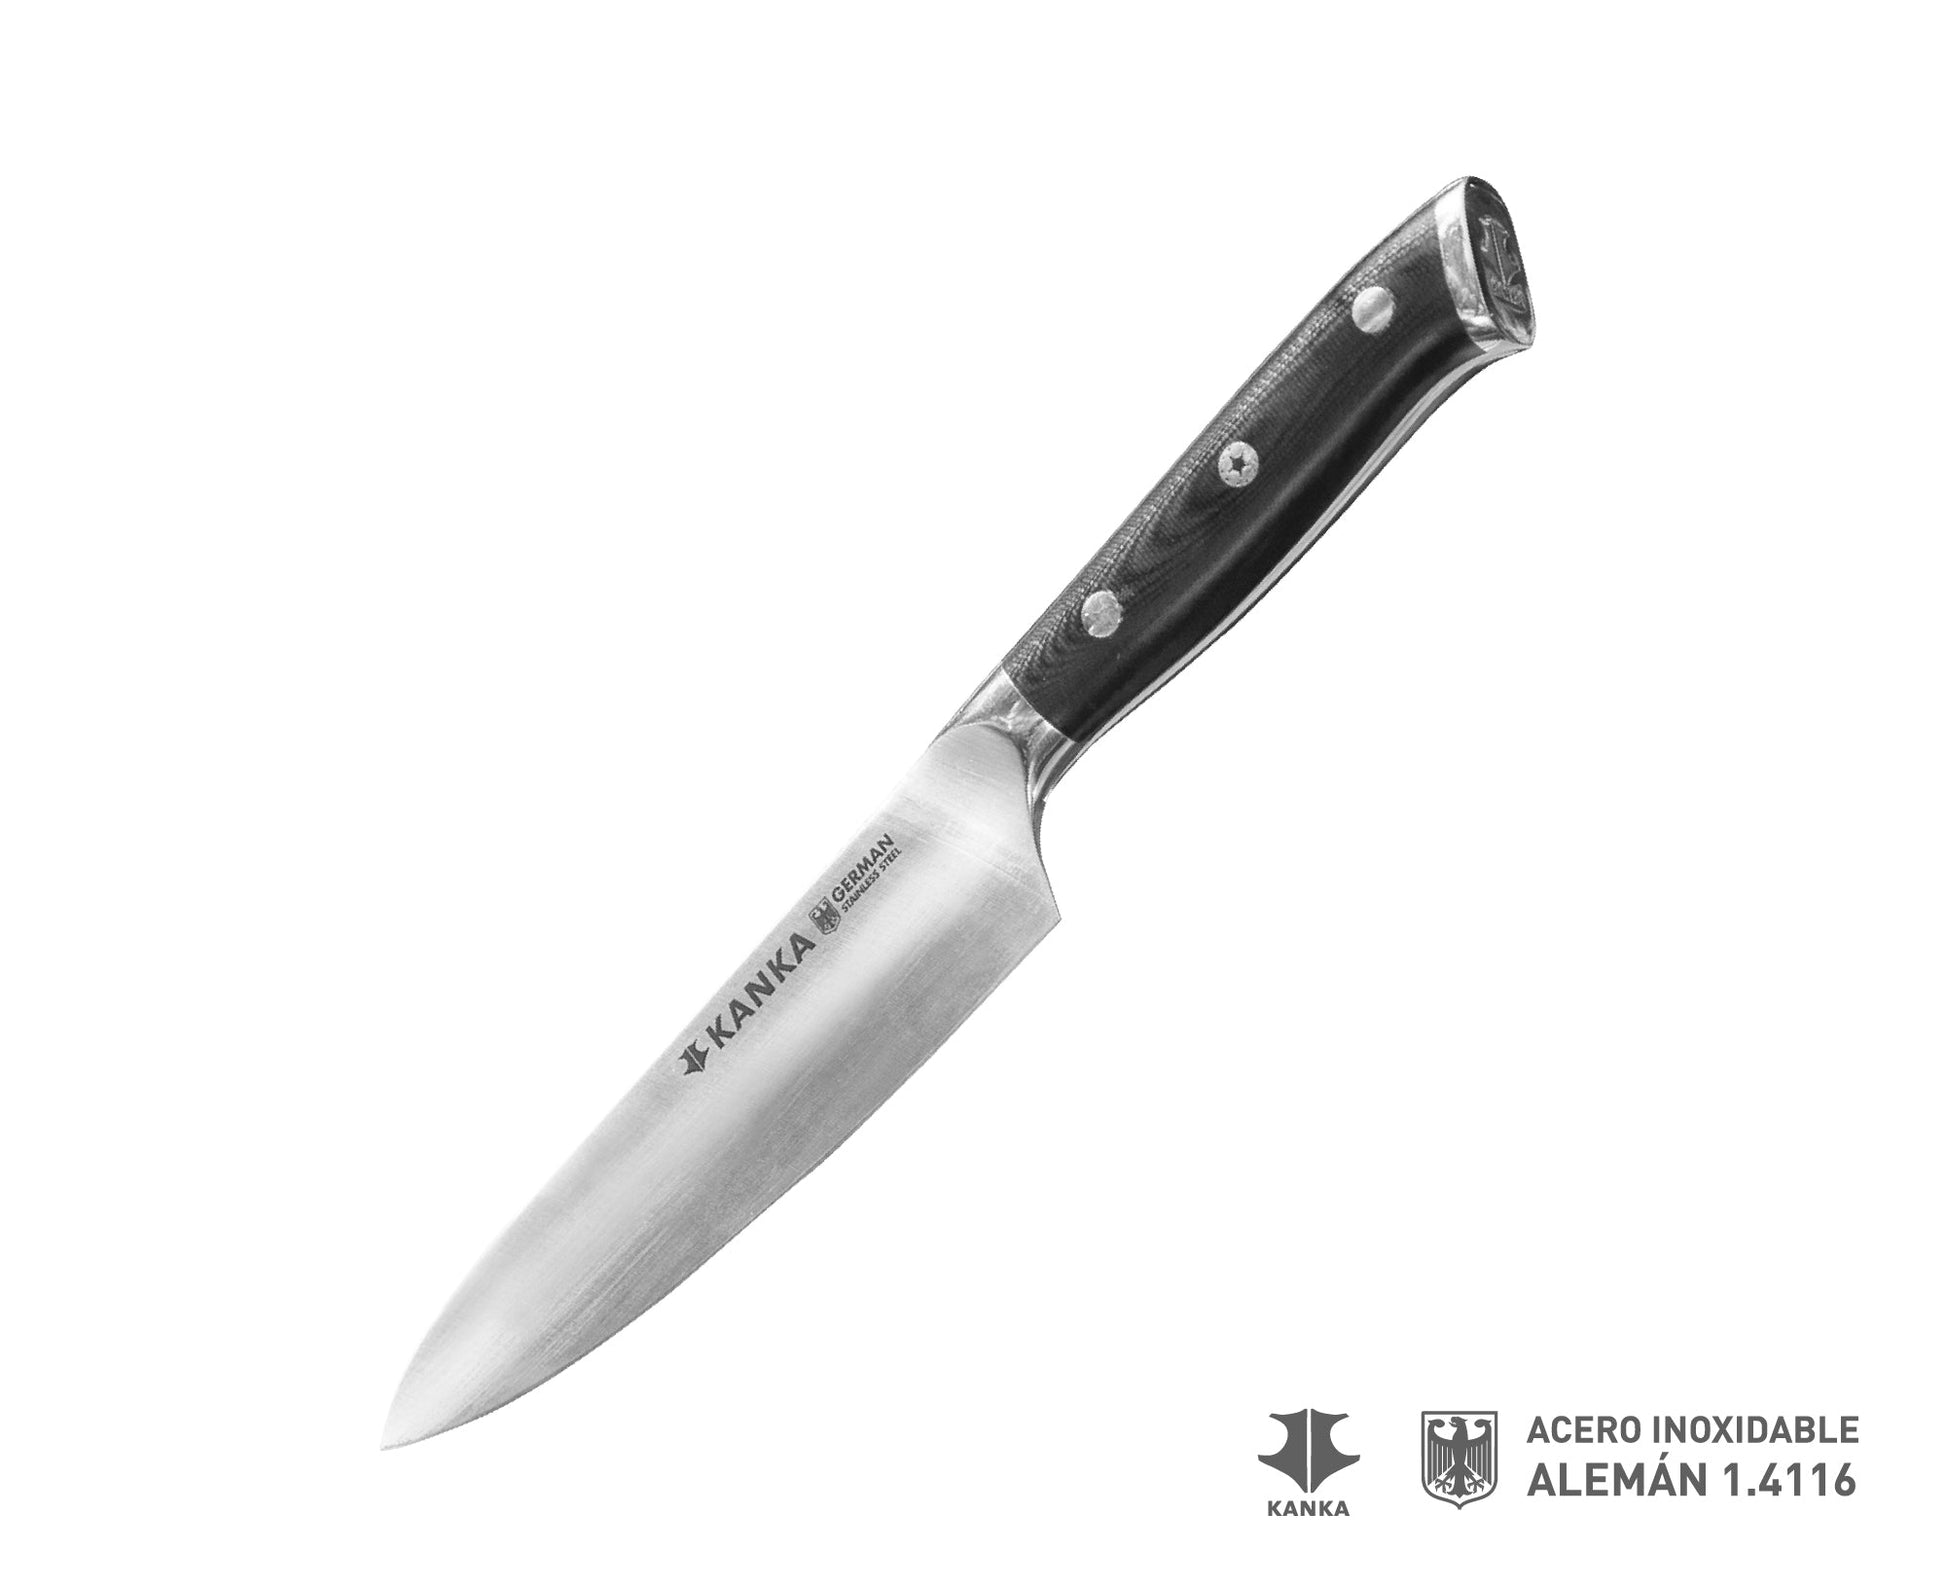 Brazilian Flame Chef Versatile Knife: Razor-Sharp, Ergonomic, Durable